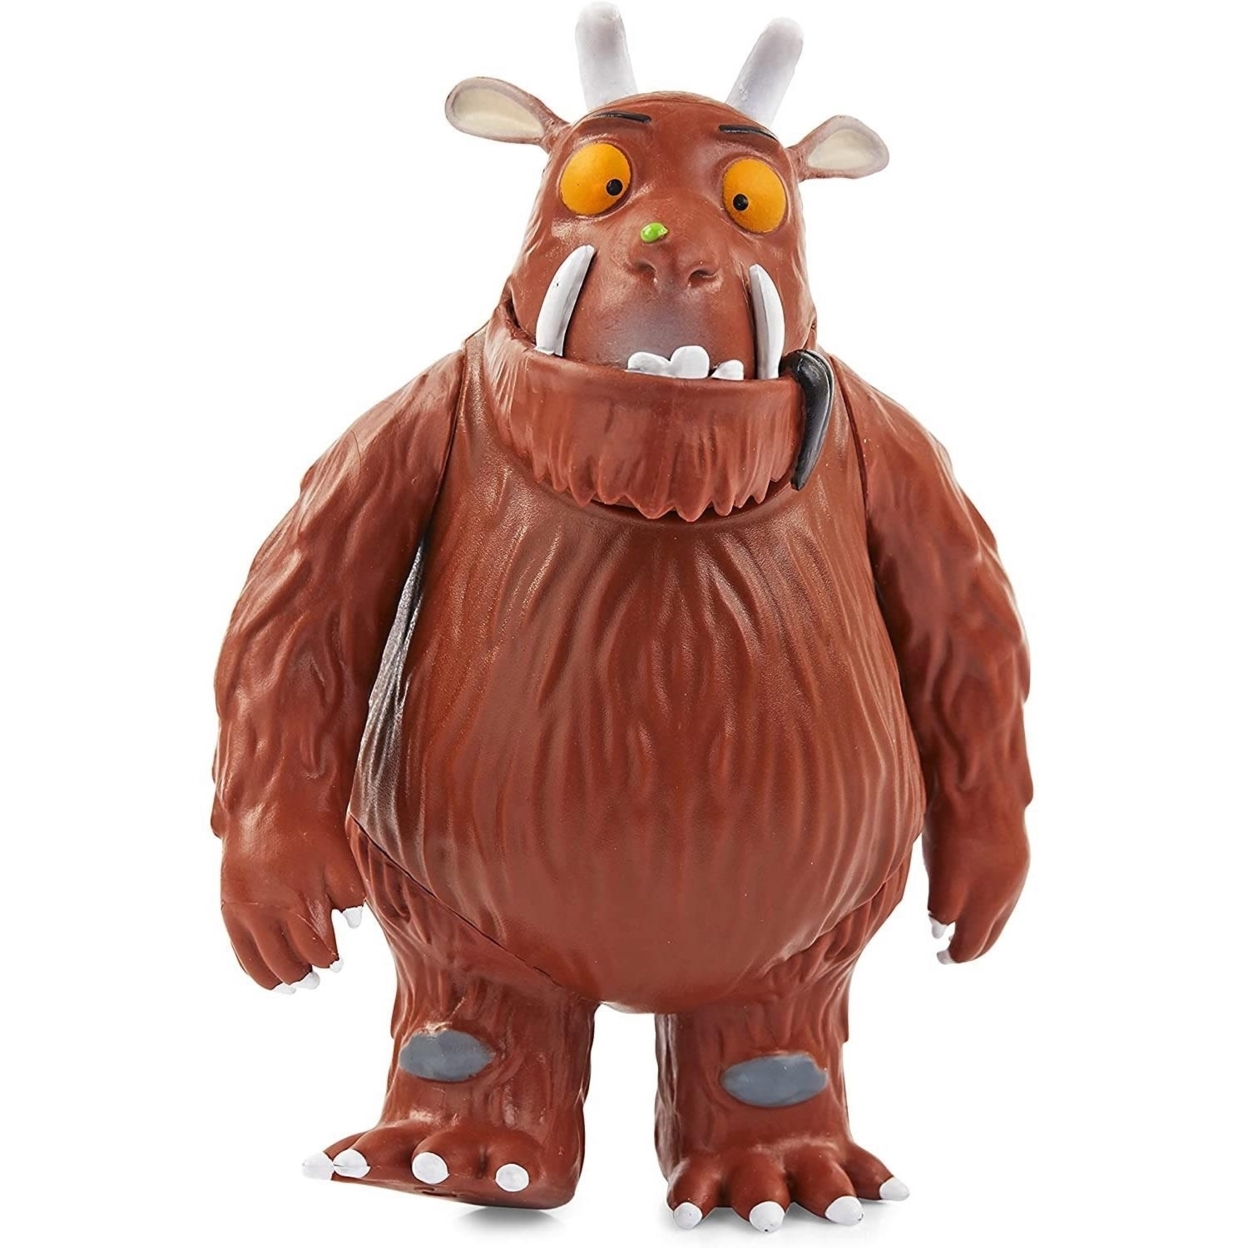 The Gruffalo Monster Kids Toy Figure Character By Julia Donaldson WOW! Stuff